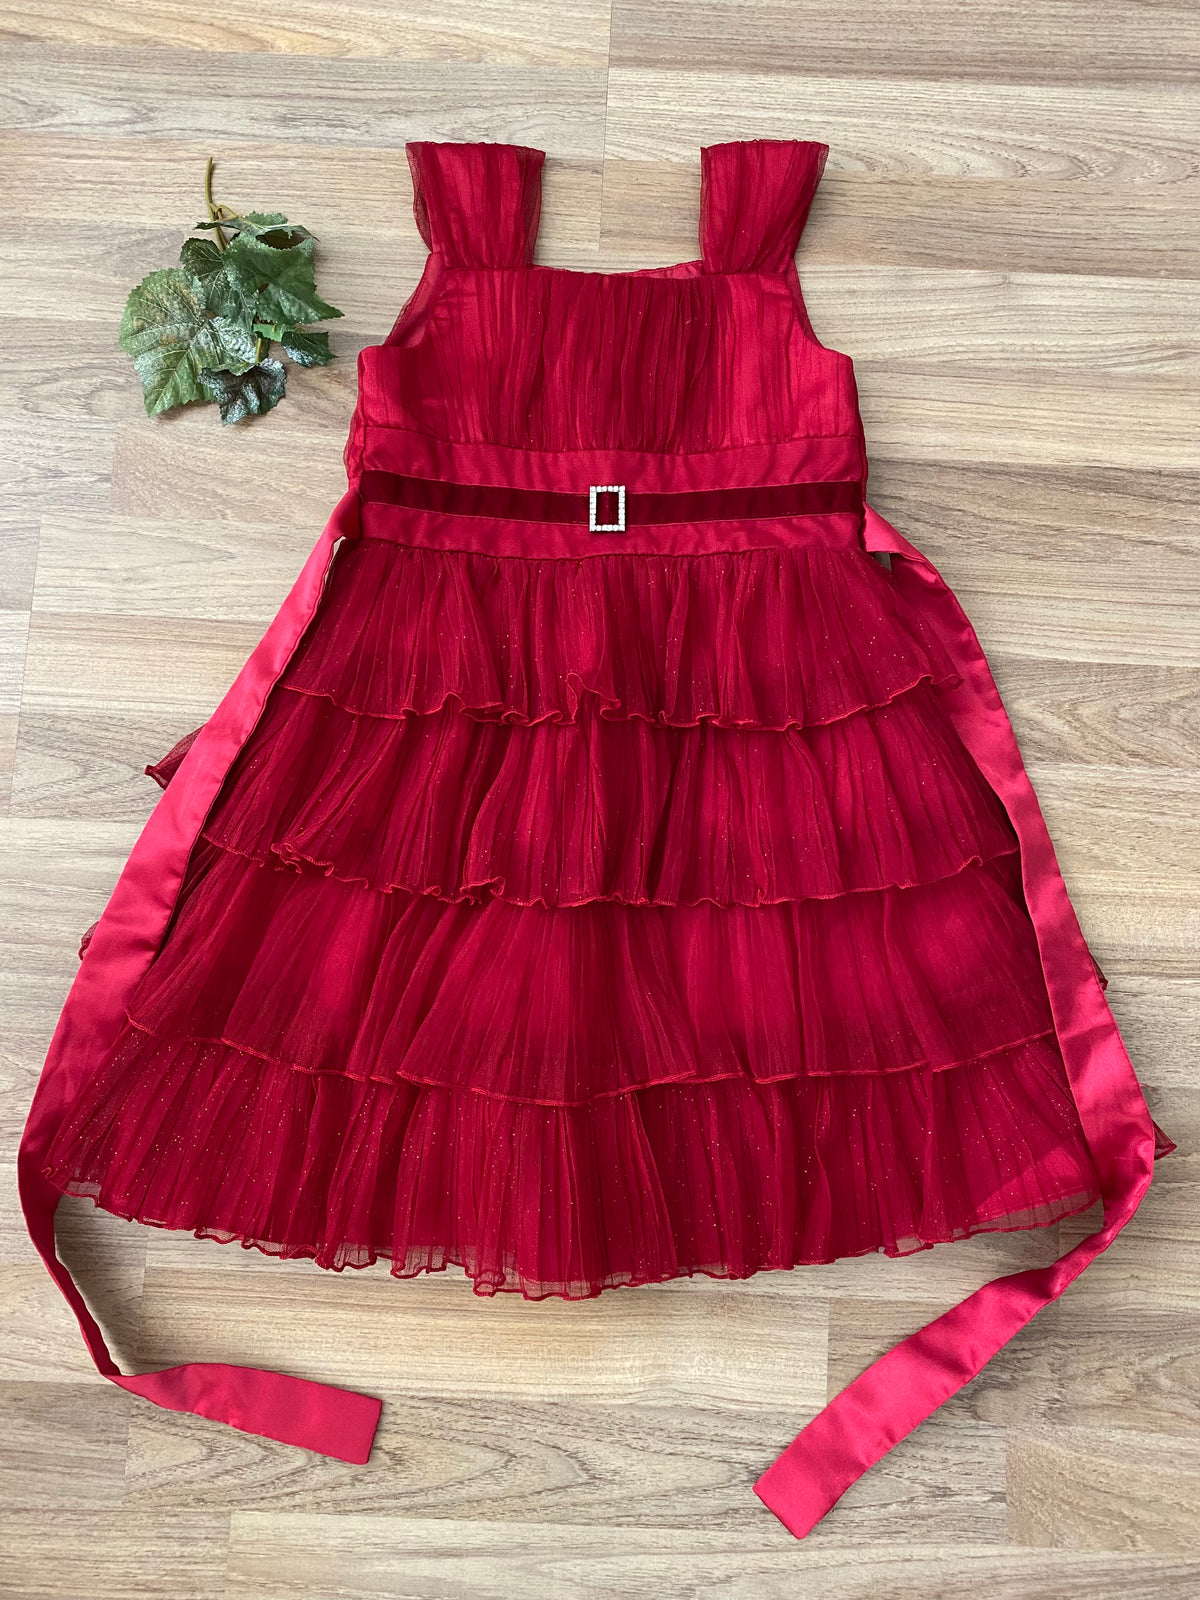 Dress (Girls Size 7)